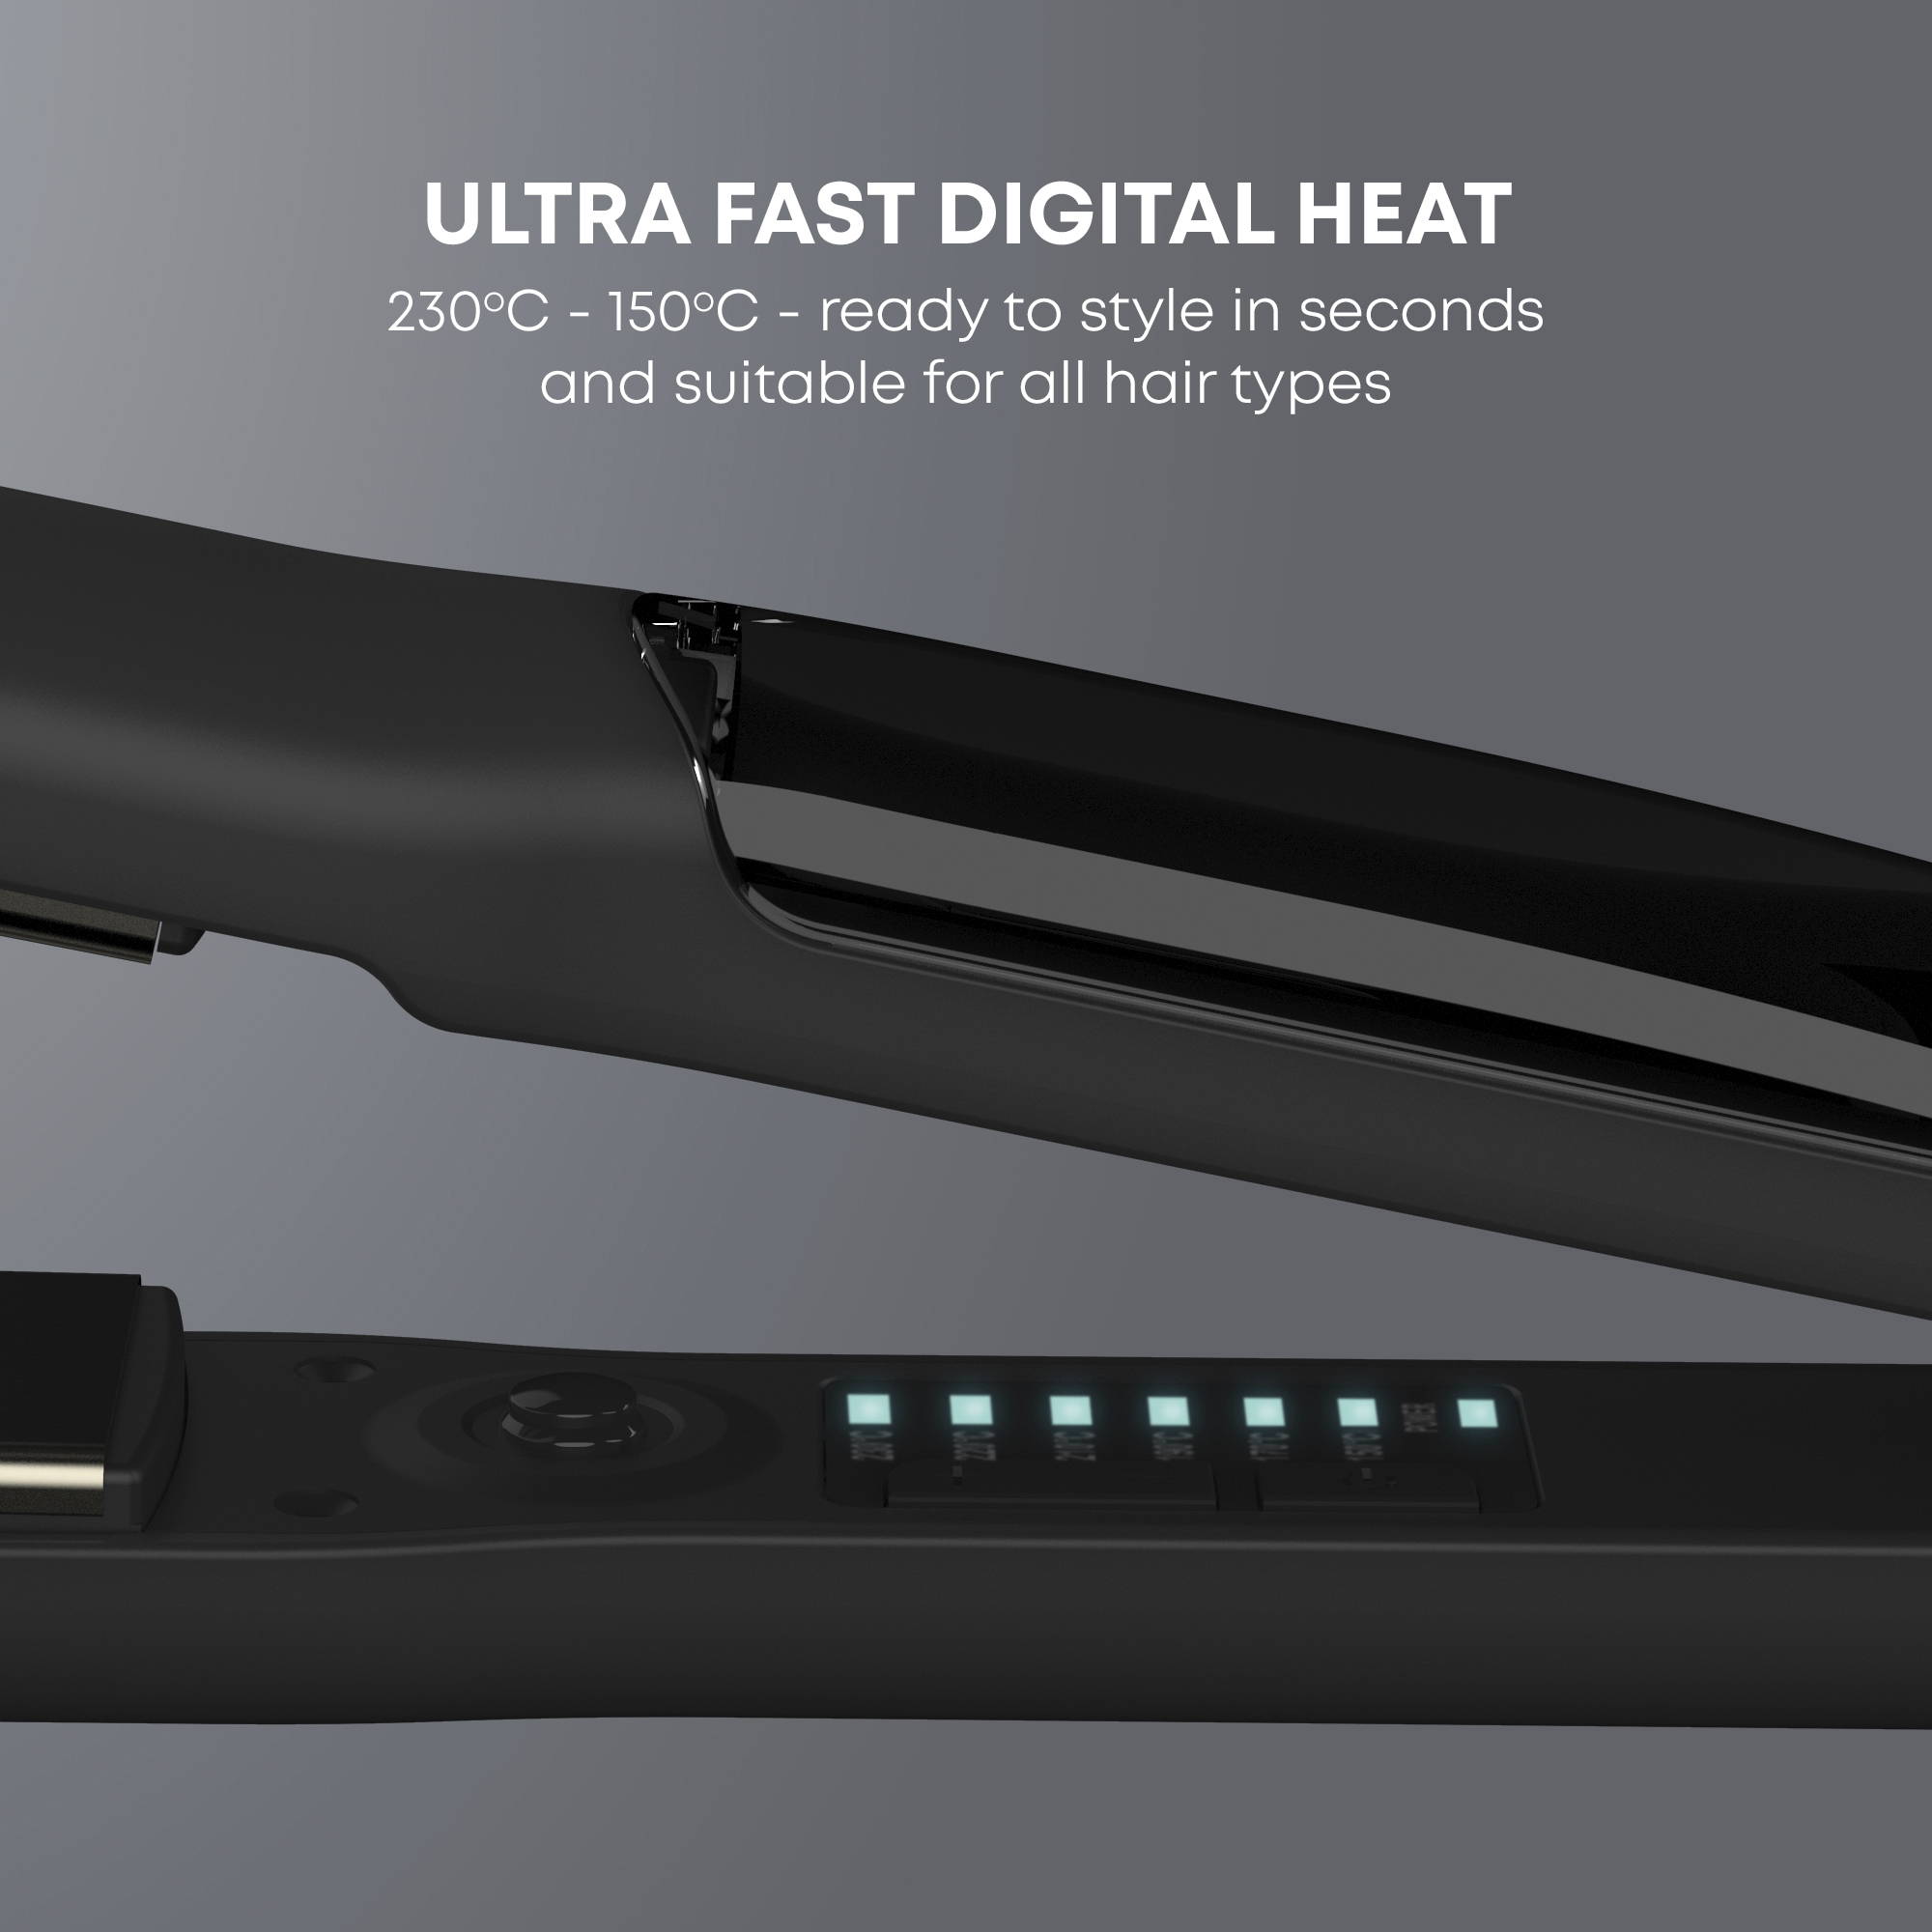 Ultra Fast Digital Heat - Adjustable Temperature Settings